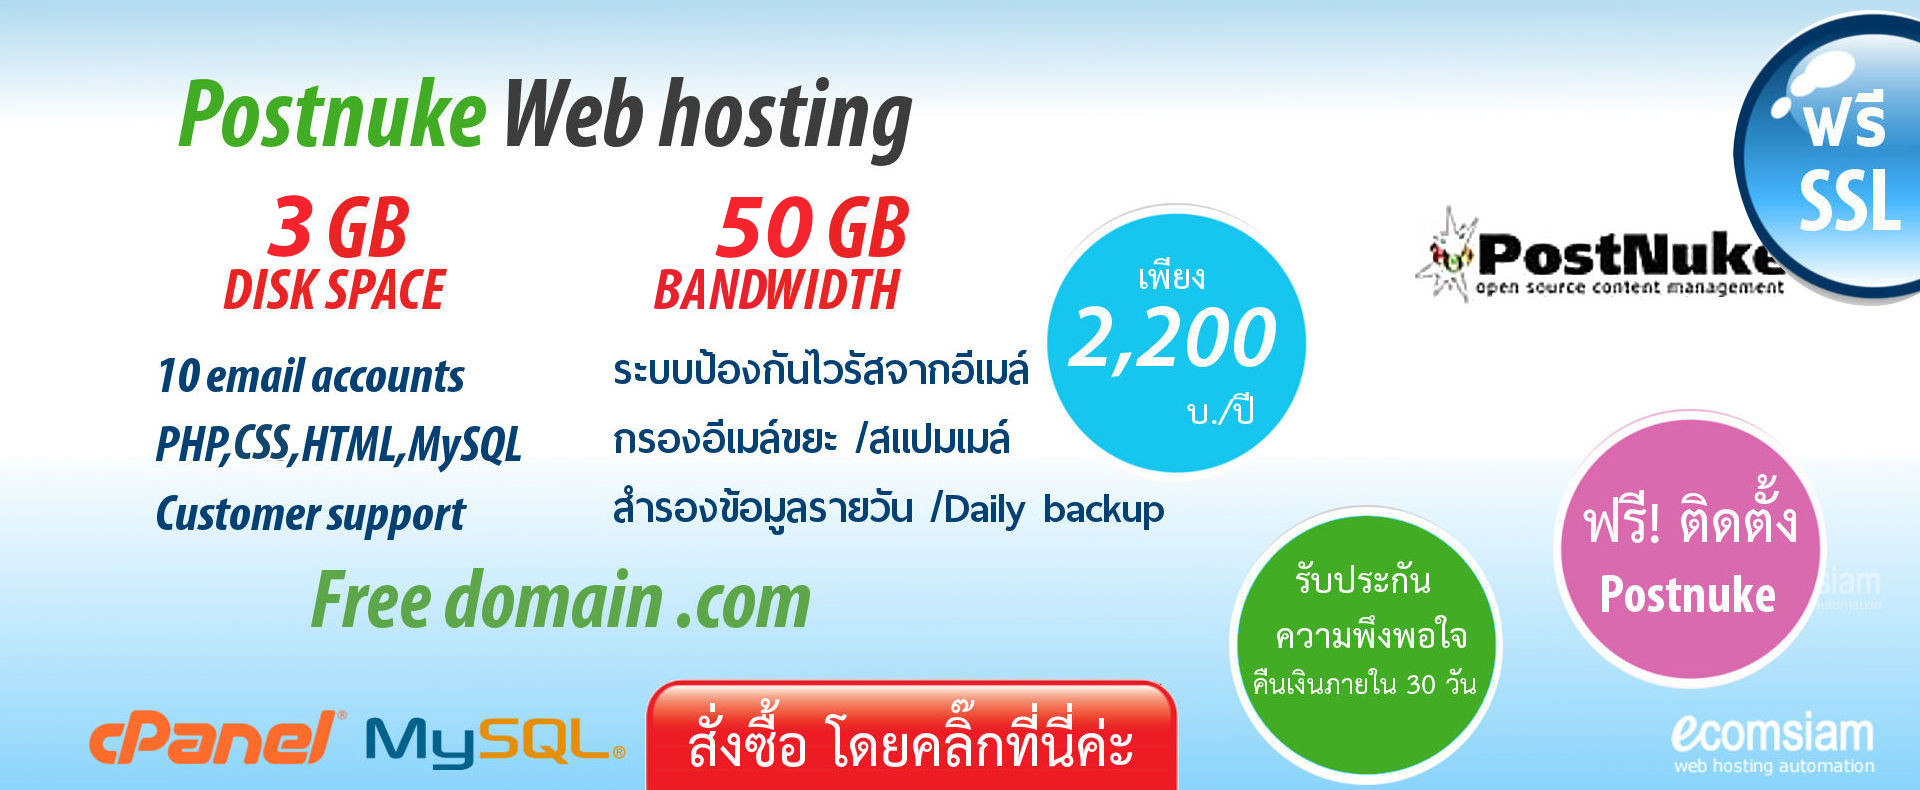 postnuke web hosting thailand -เว็บโฮสติ้ง ฟรีโดเมน ฟรี SSL - แนะนำ thailandwebhost web hosting thailand - Support ลูกค้า บริการดี ดูแลดี